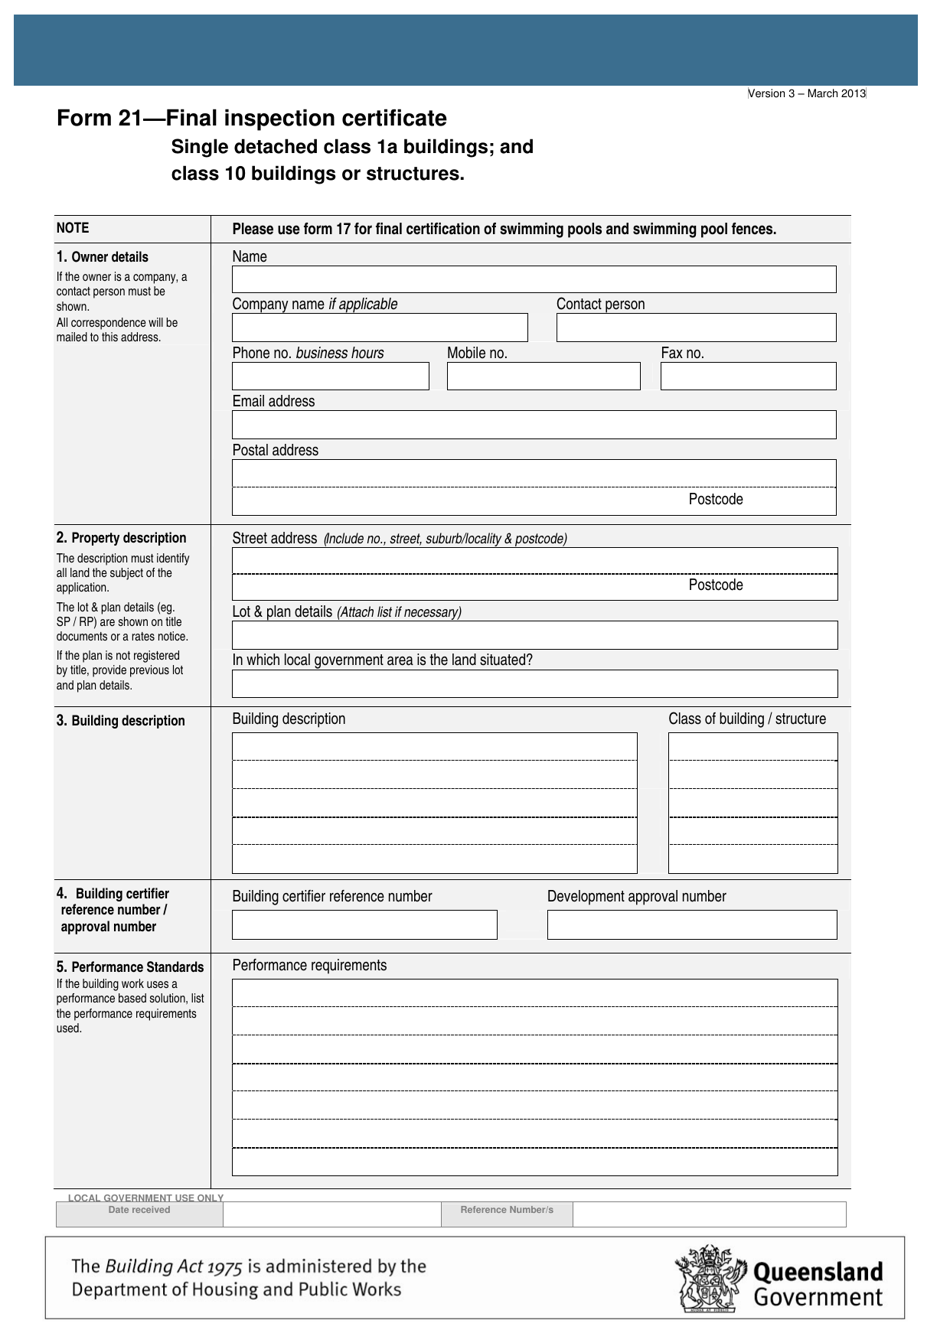 Form 21 Final Inspection Certificate - Queensland, Australia, Page 1